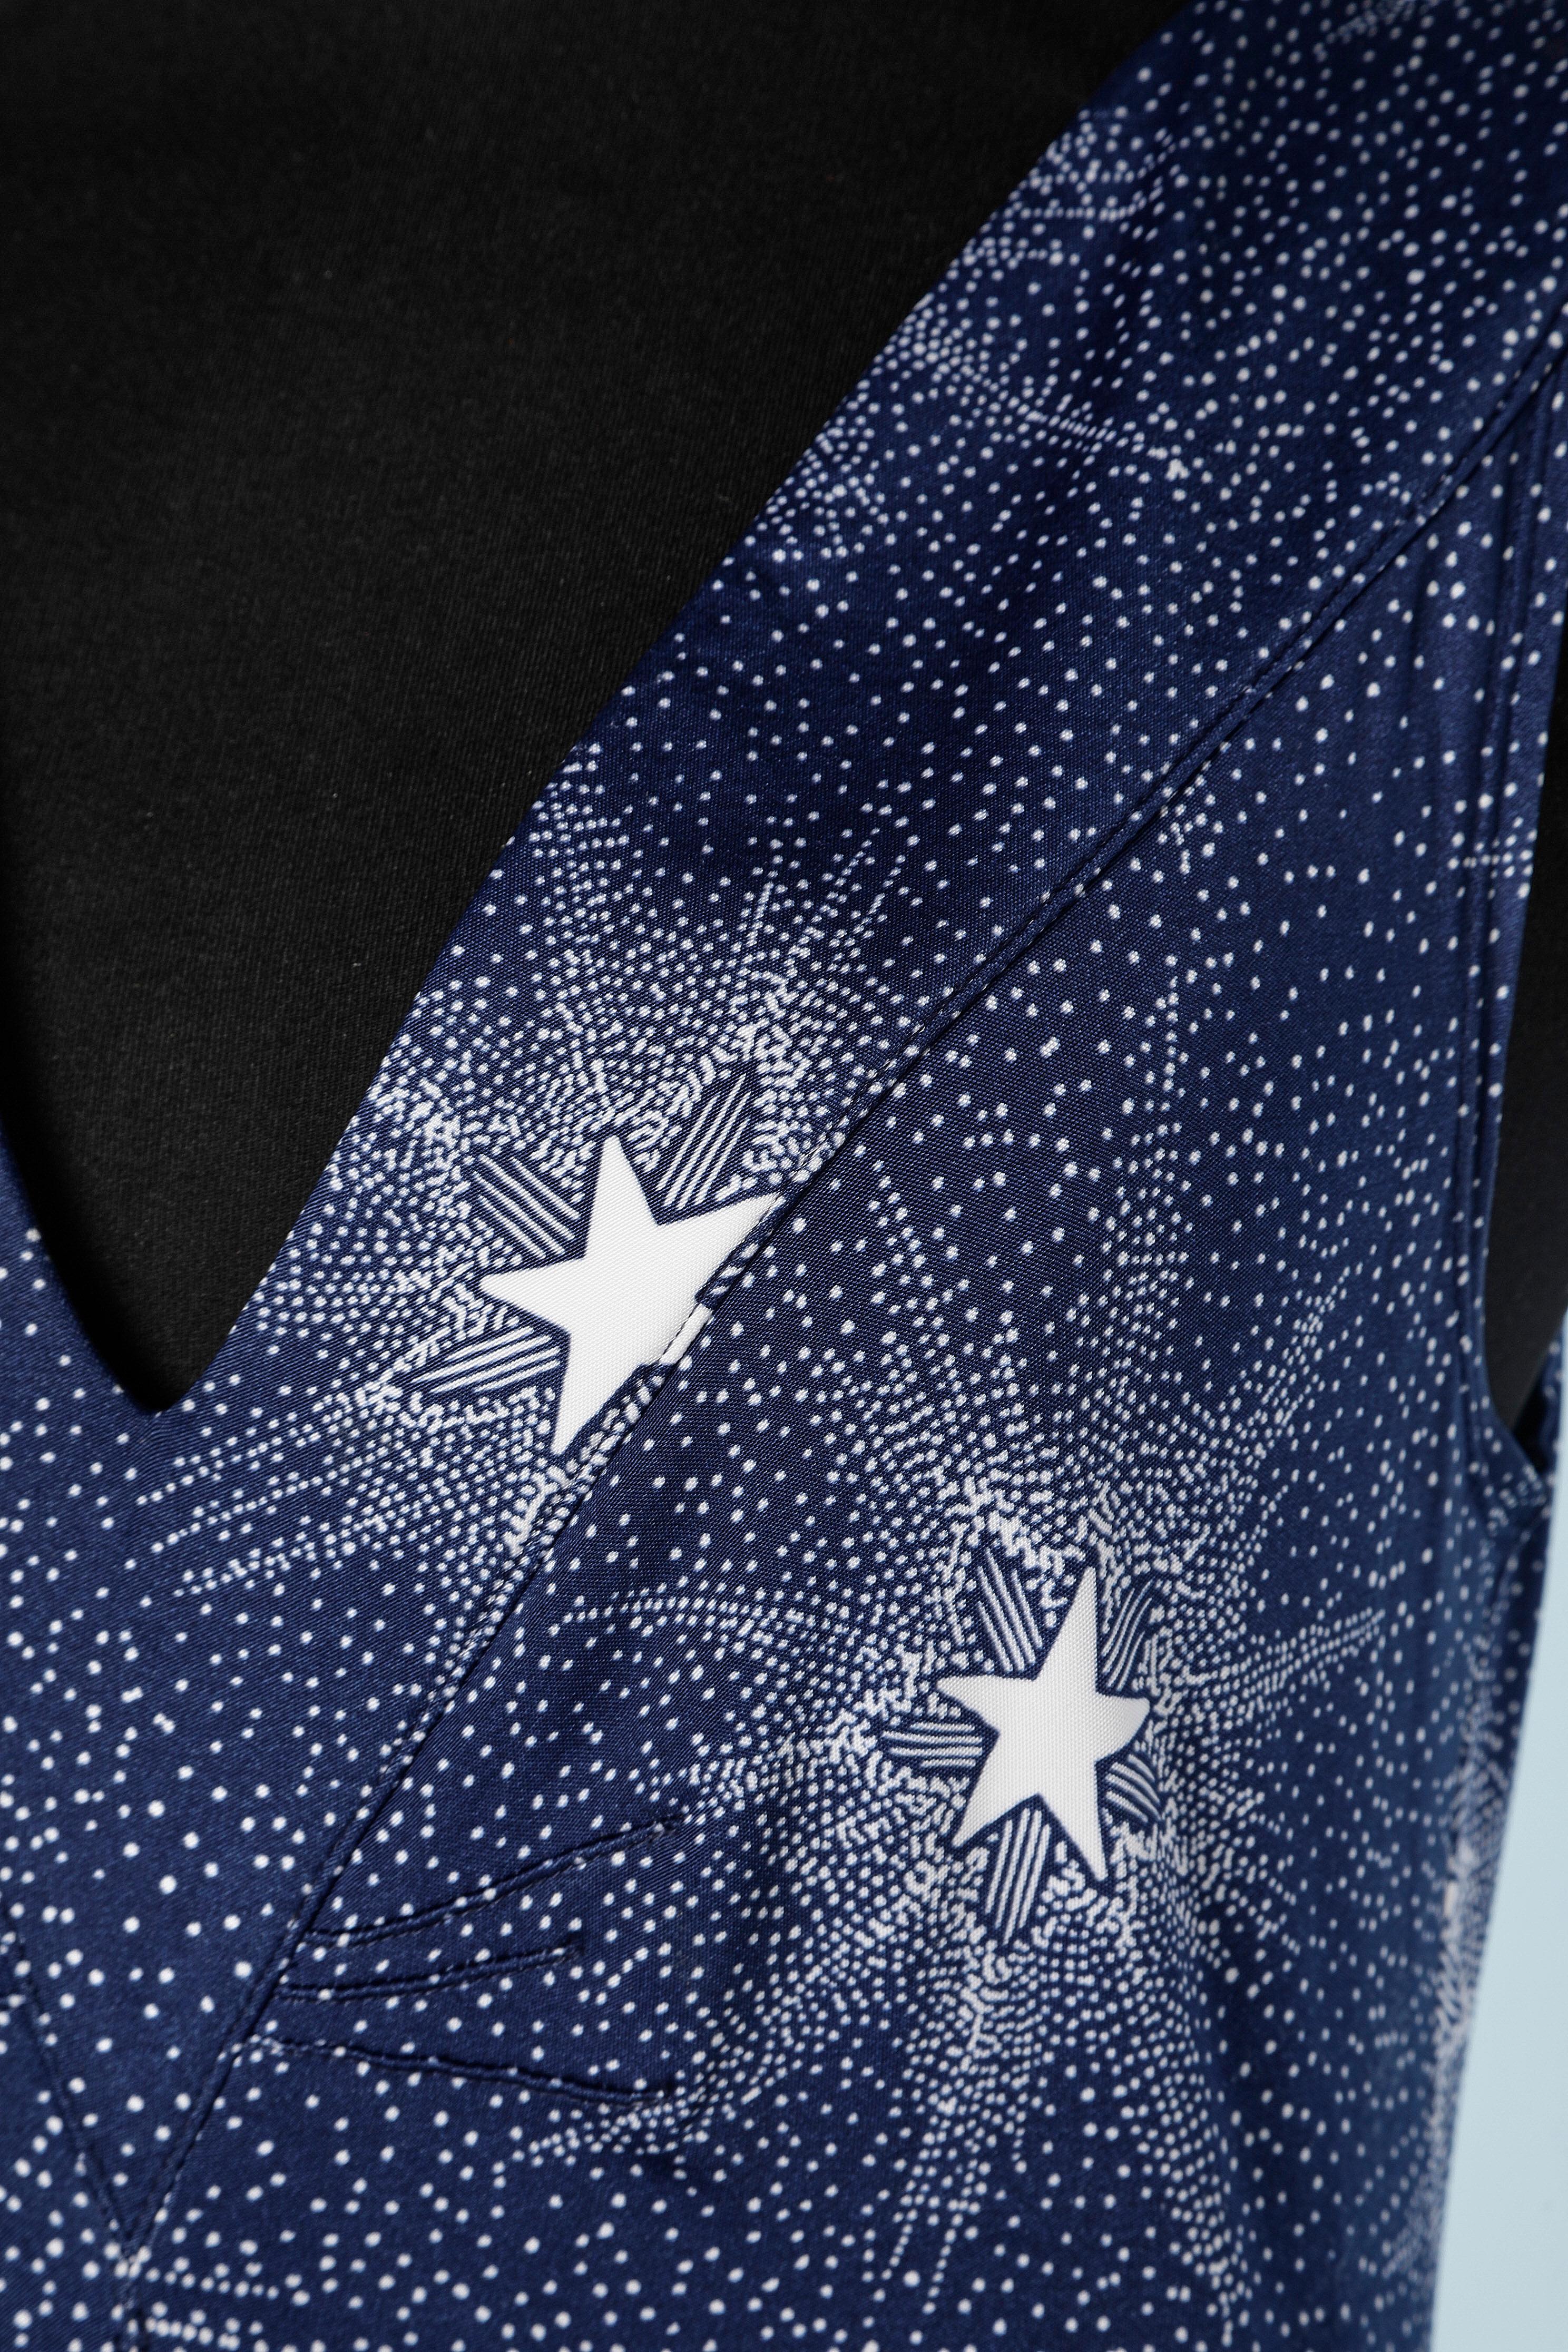 Maxi sleeveless dress with stars print. Fabric composition: 95% rayon, 5% elastane 
SIZE 40 (M ) 